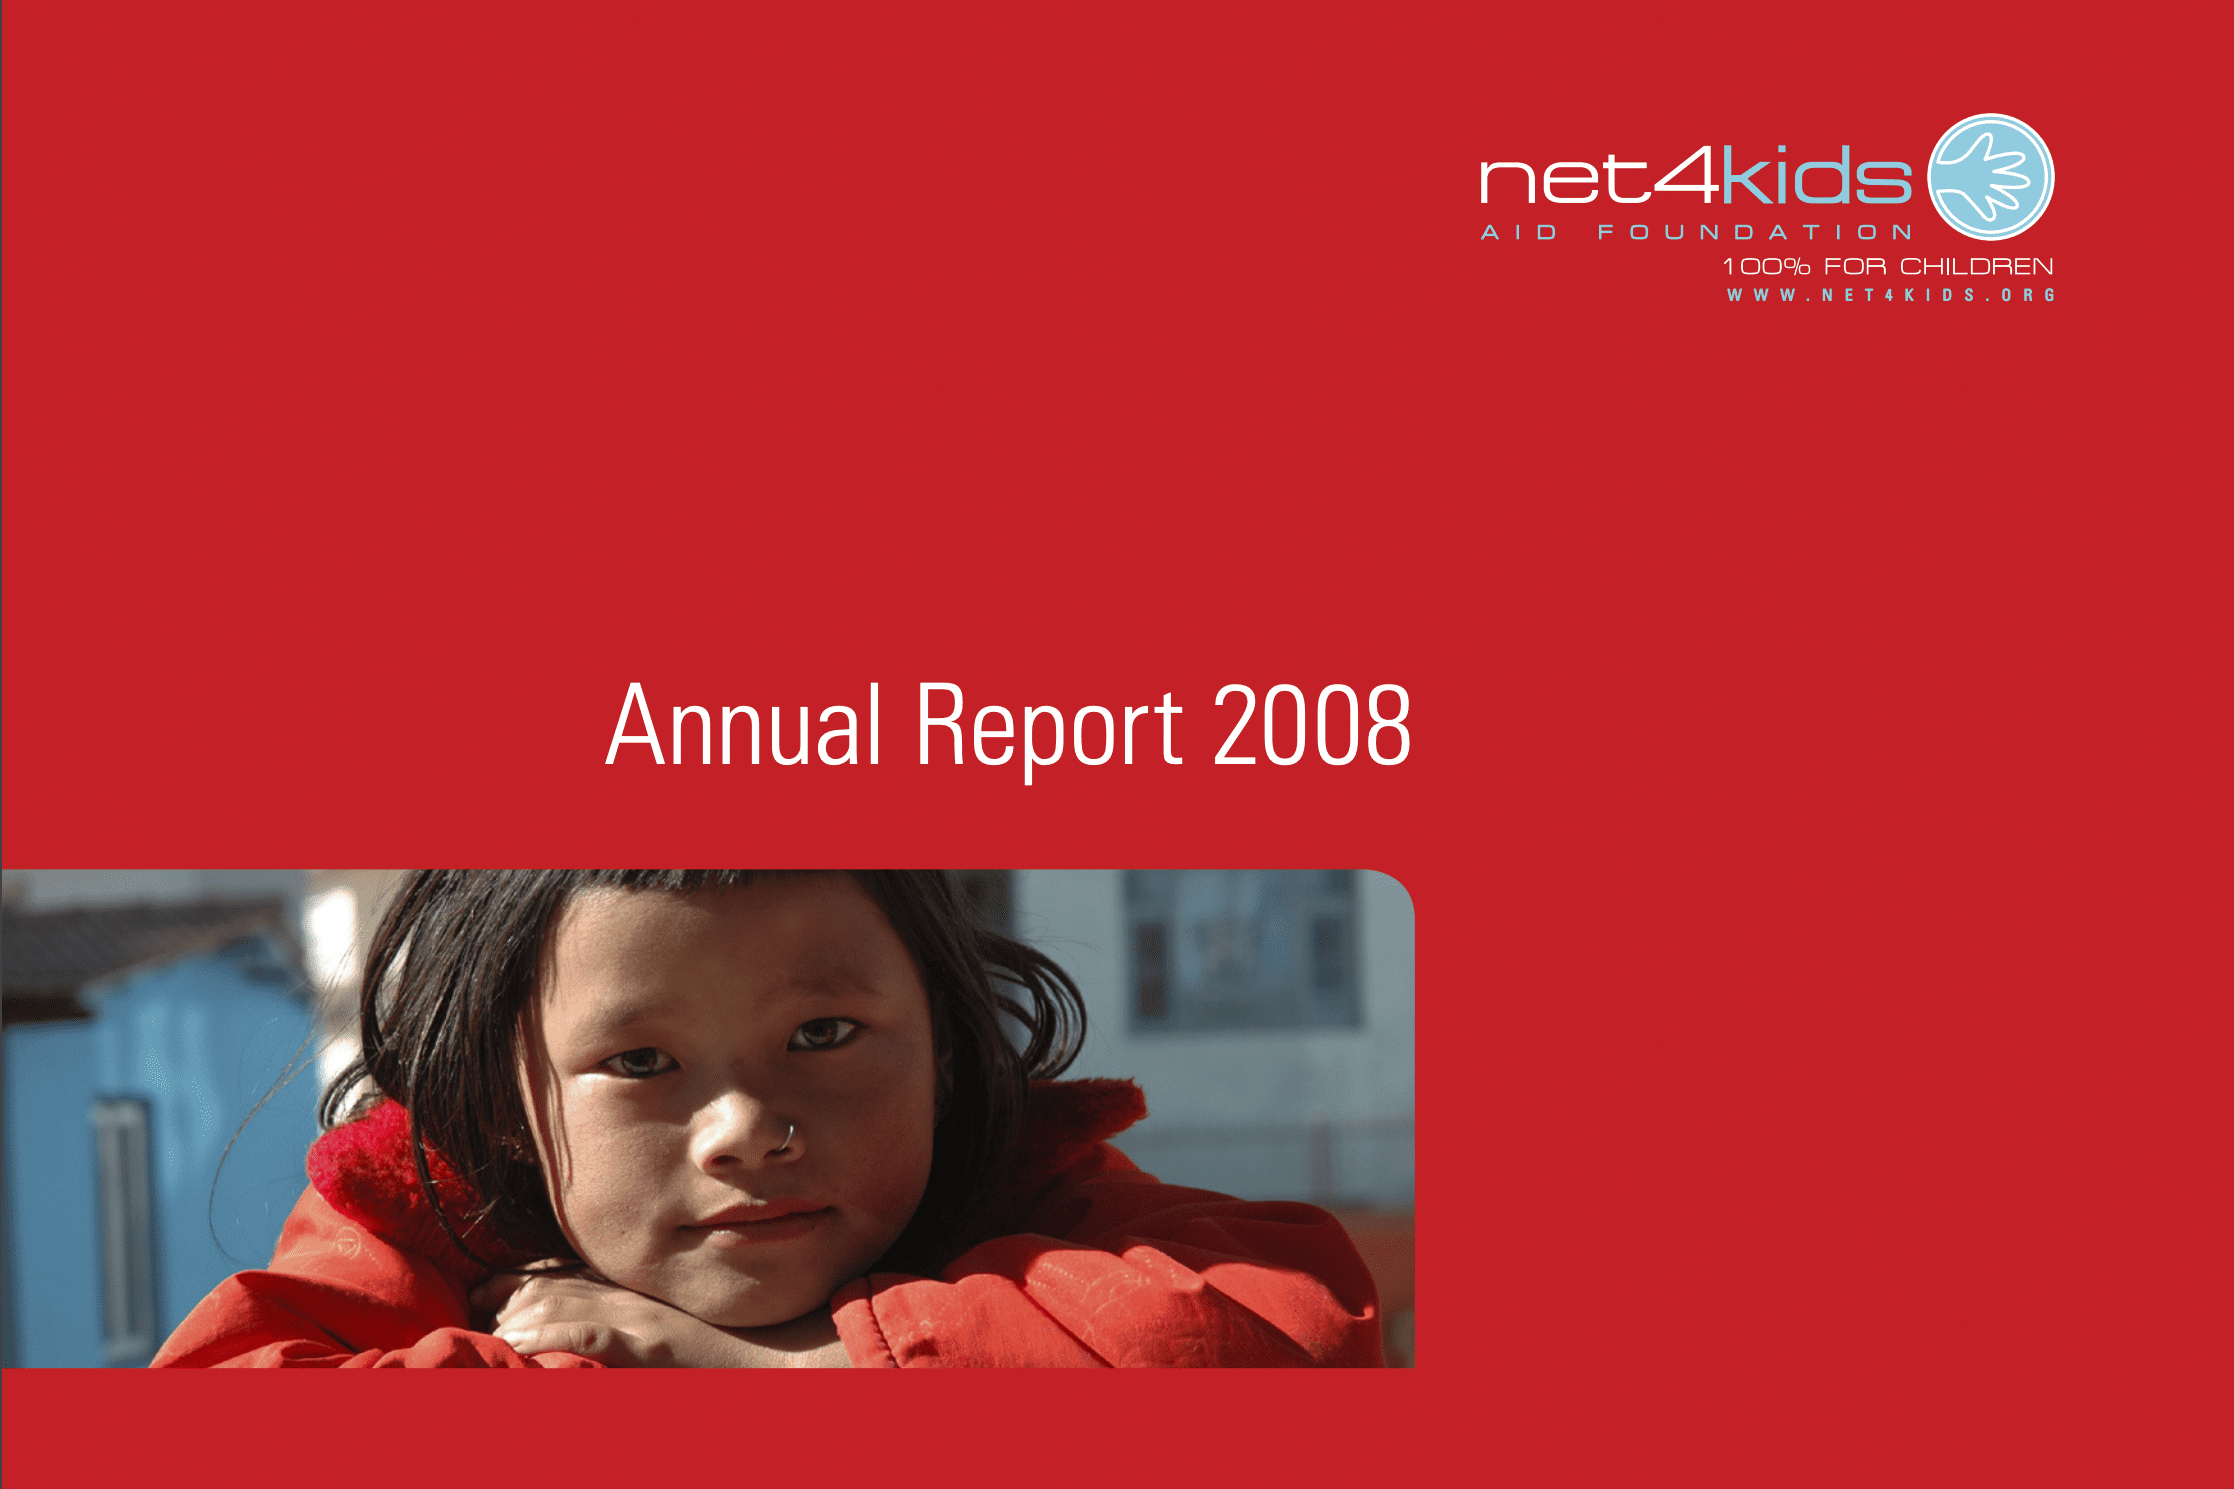 Annual Report 2008 Net4kids